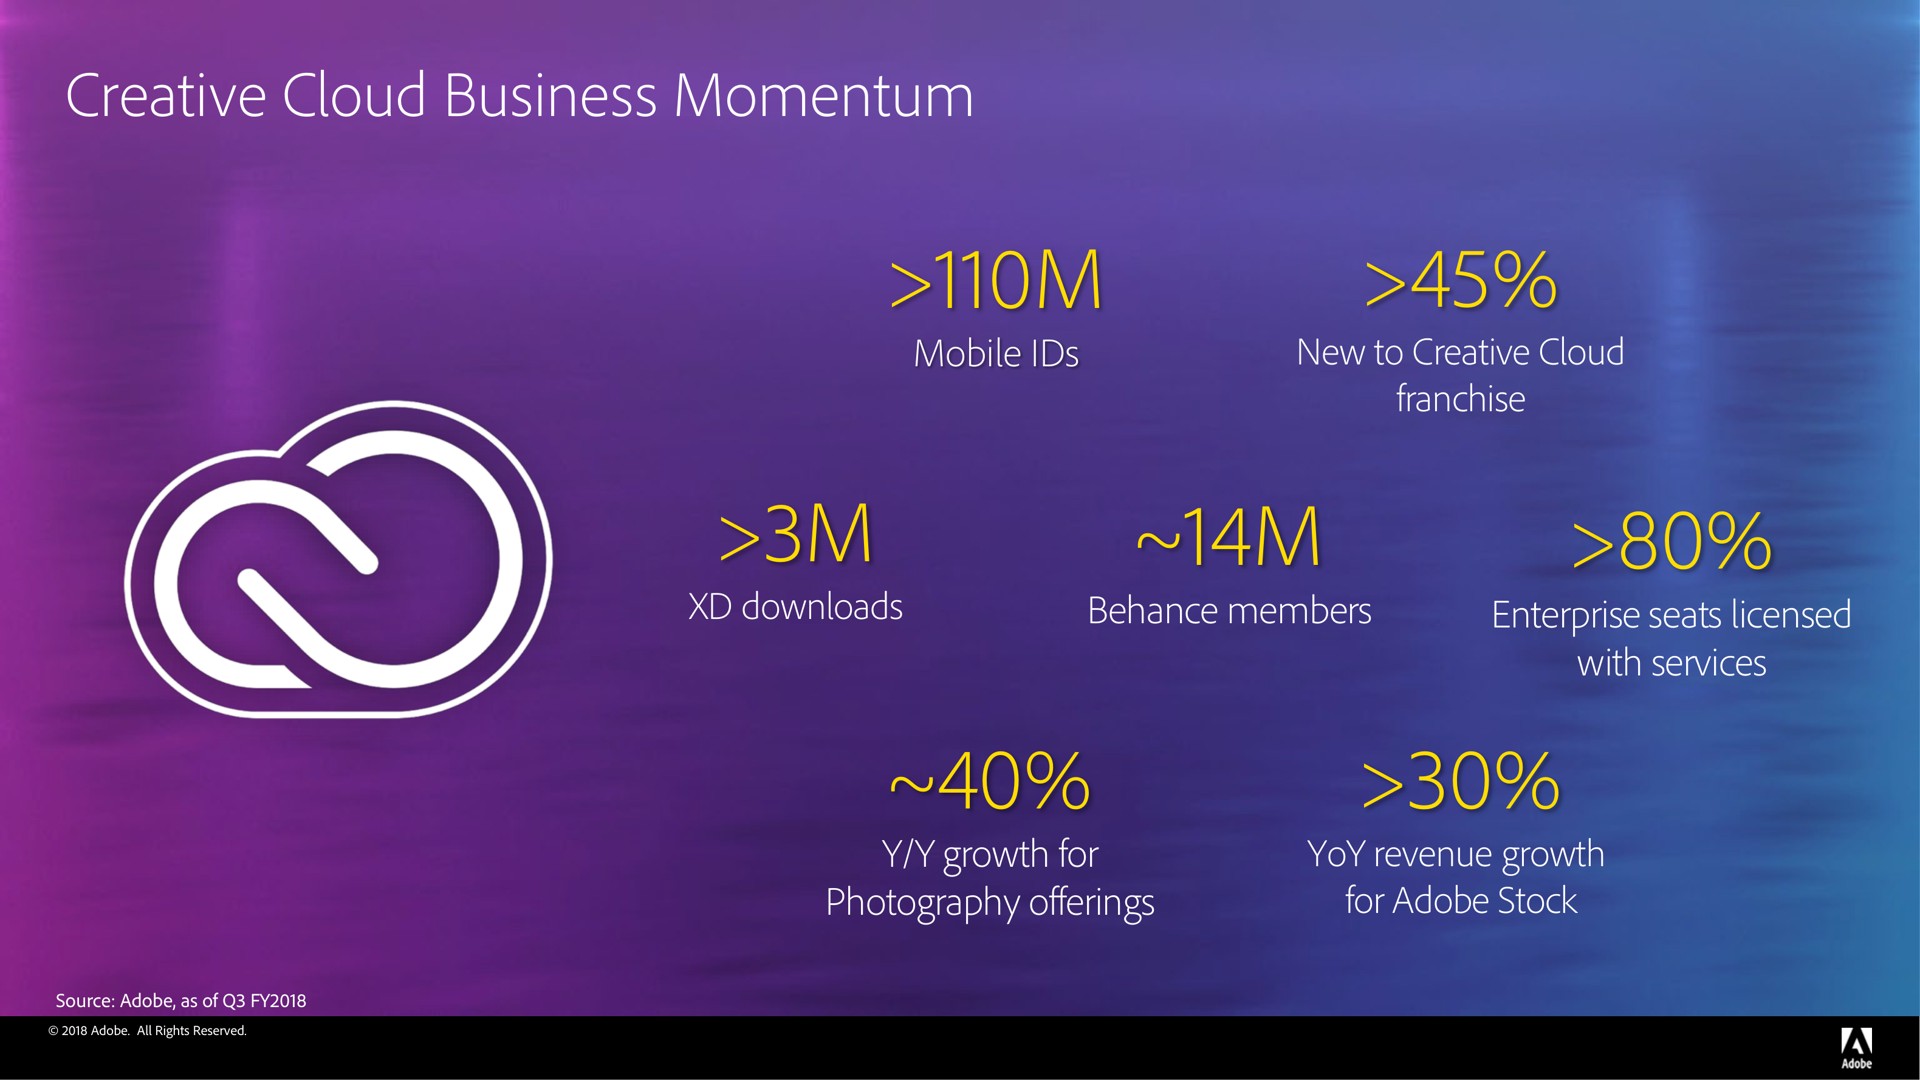 creative cloud business momentum | Adobe